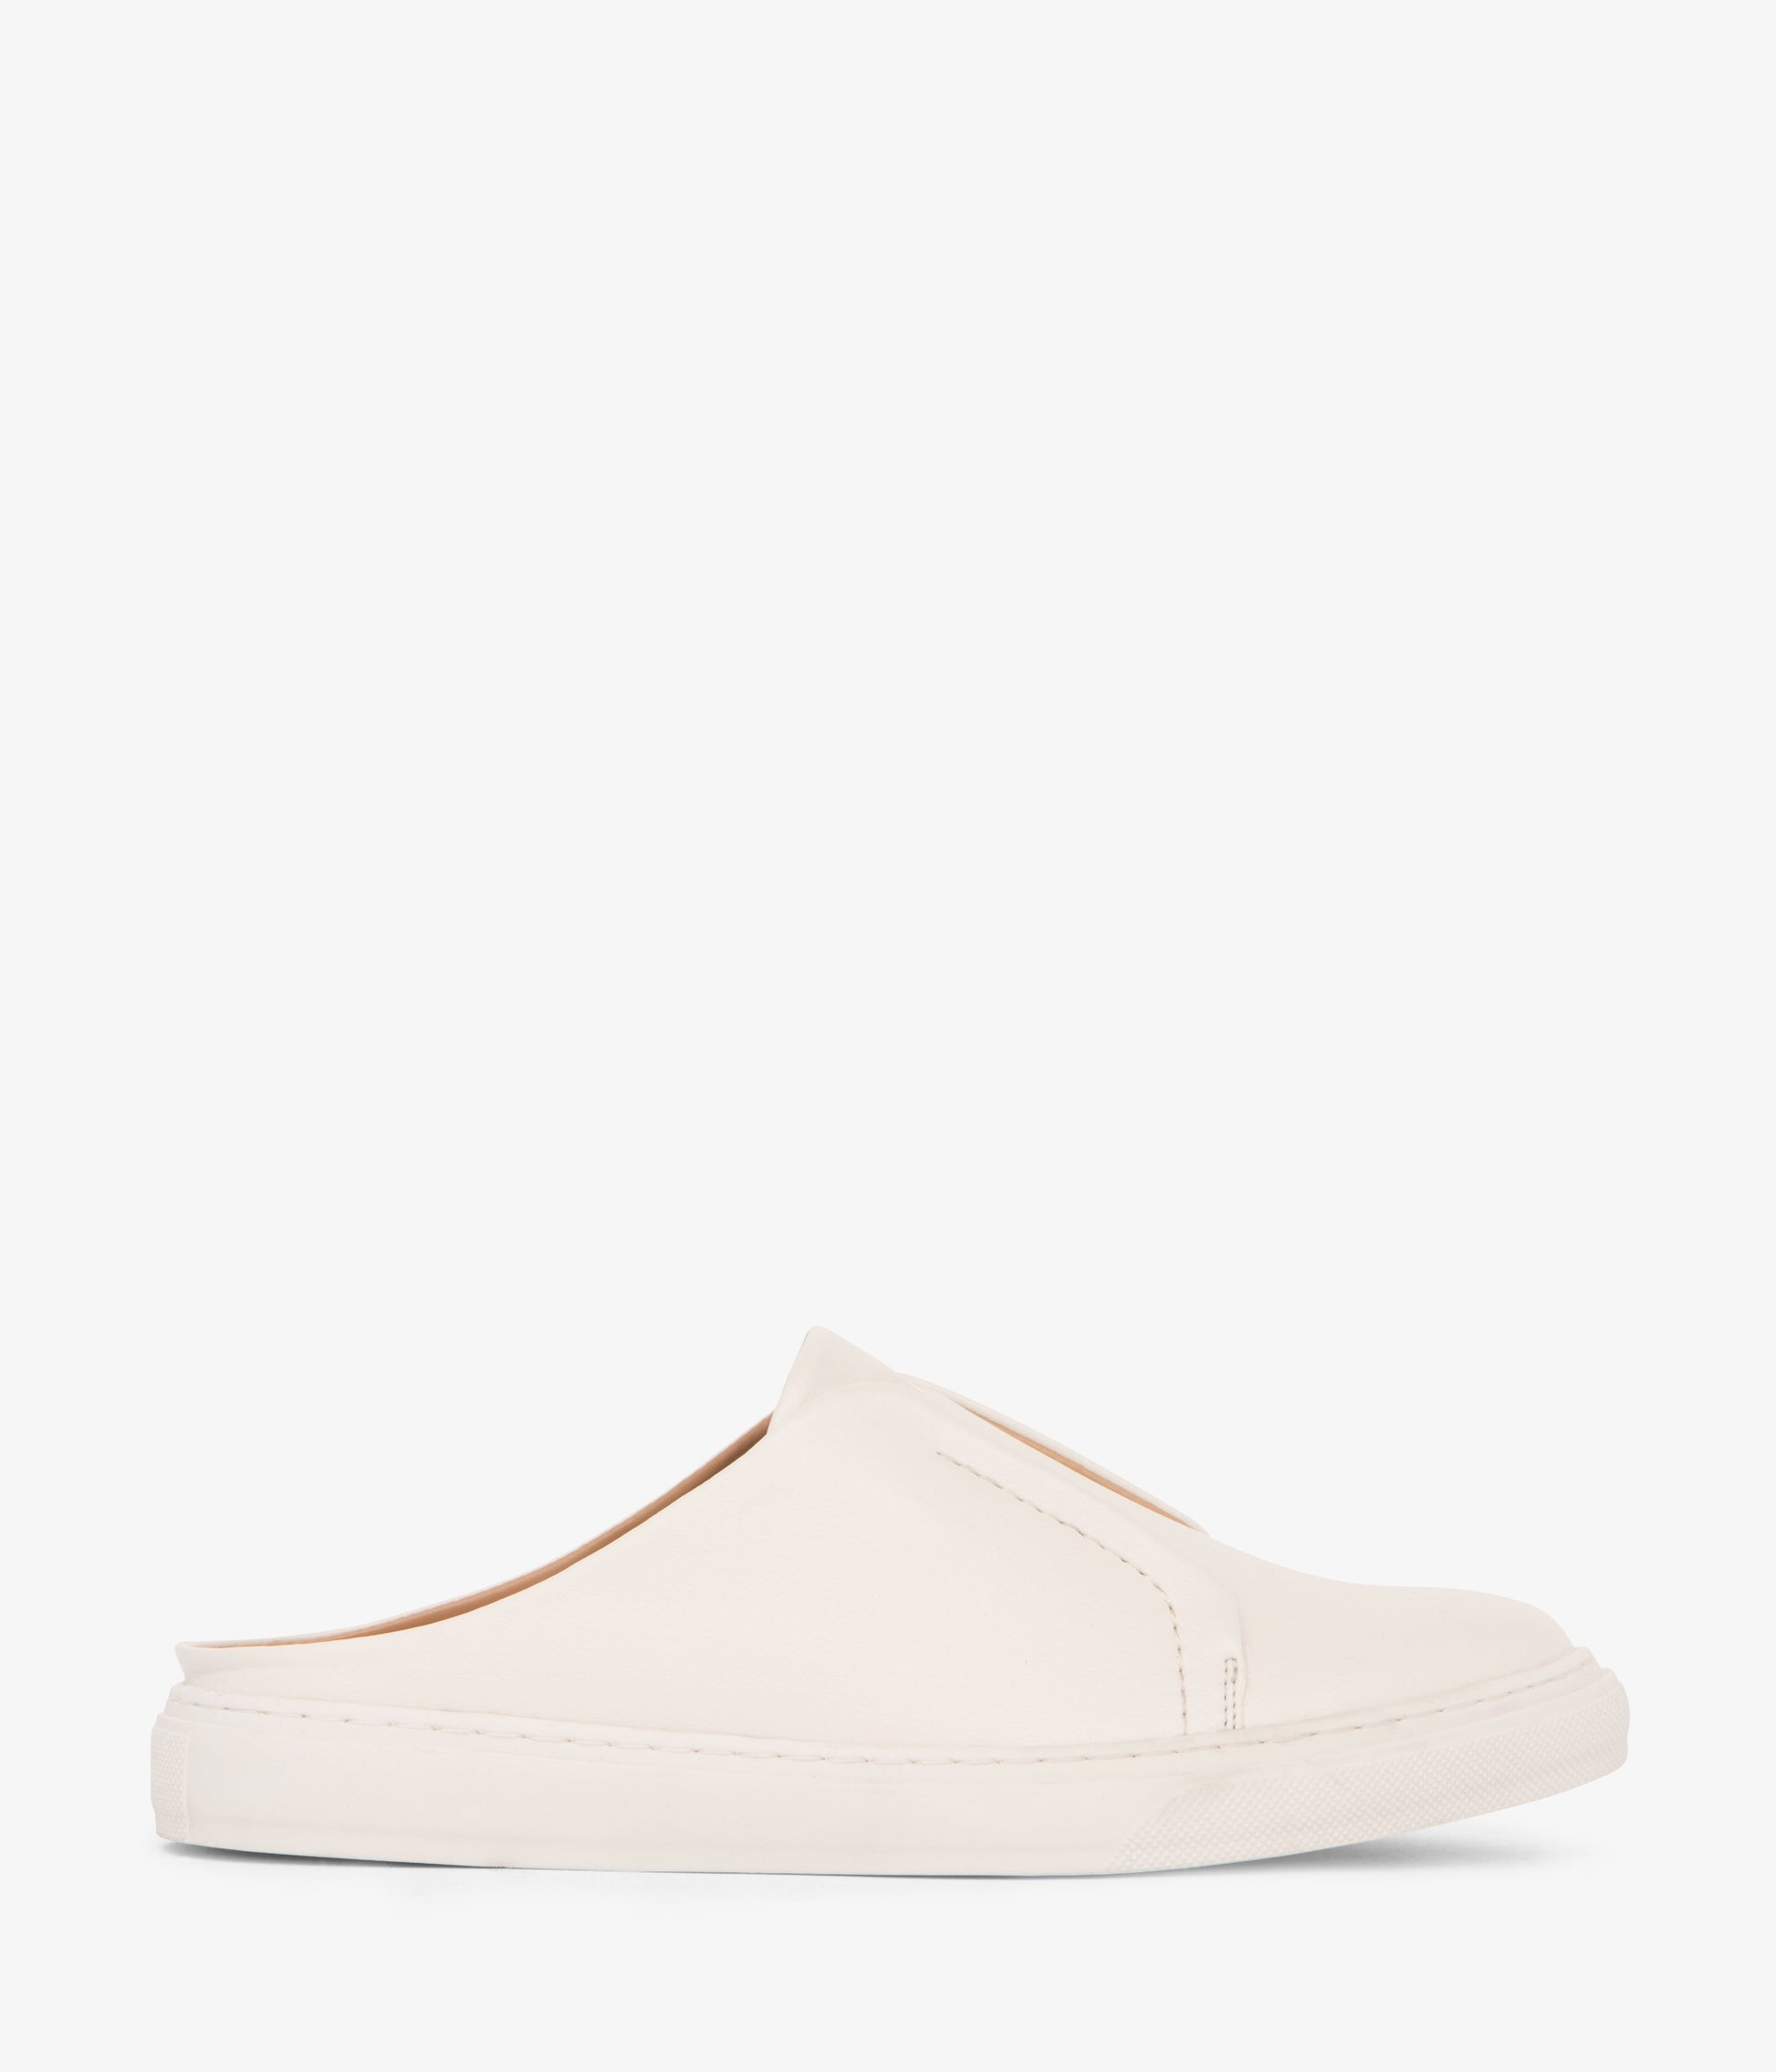 variant::blanc -- elma shoe blanc